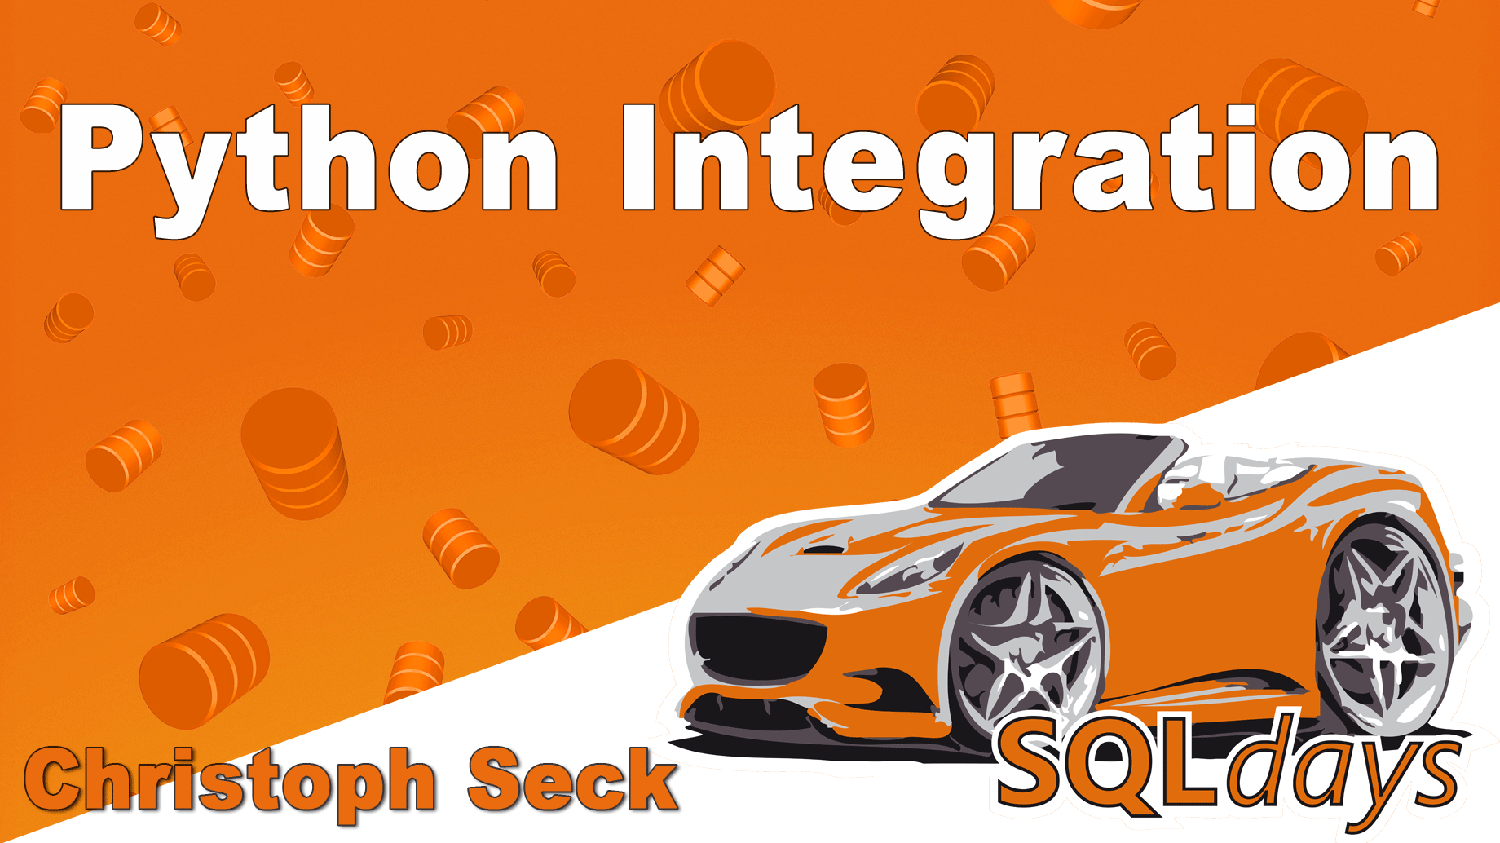 2017/SQLdays/Python-Integration-ChristophSeck